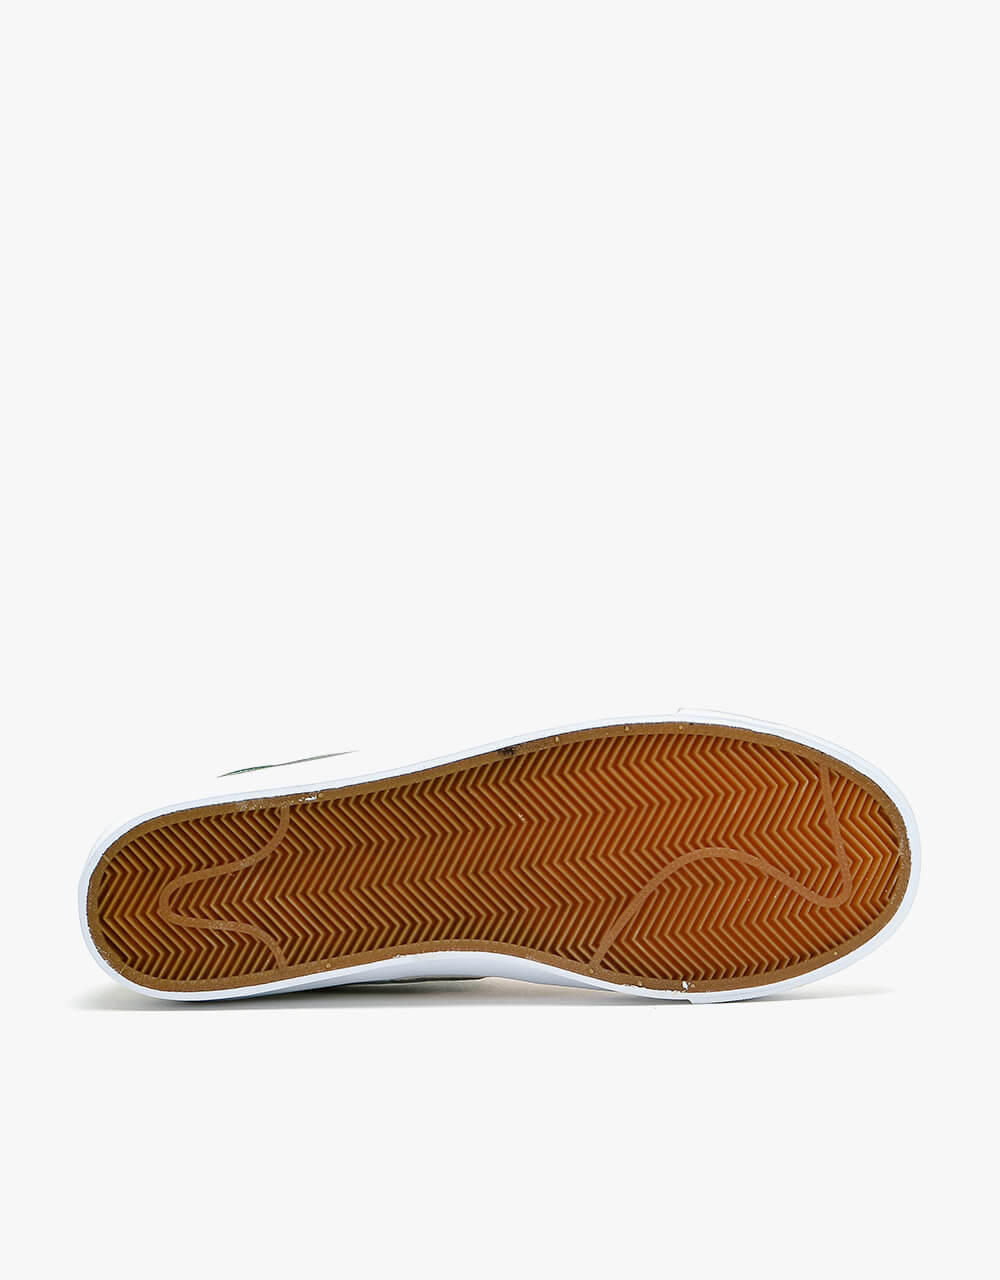 Nike SB Zoom Blazer Low Pro GT Skate Shoes - White/Fir-White-Gum Lt Brown